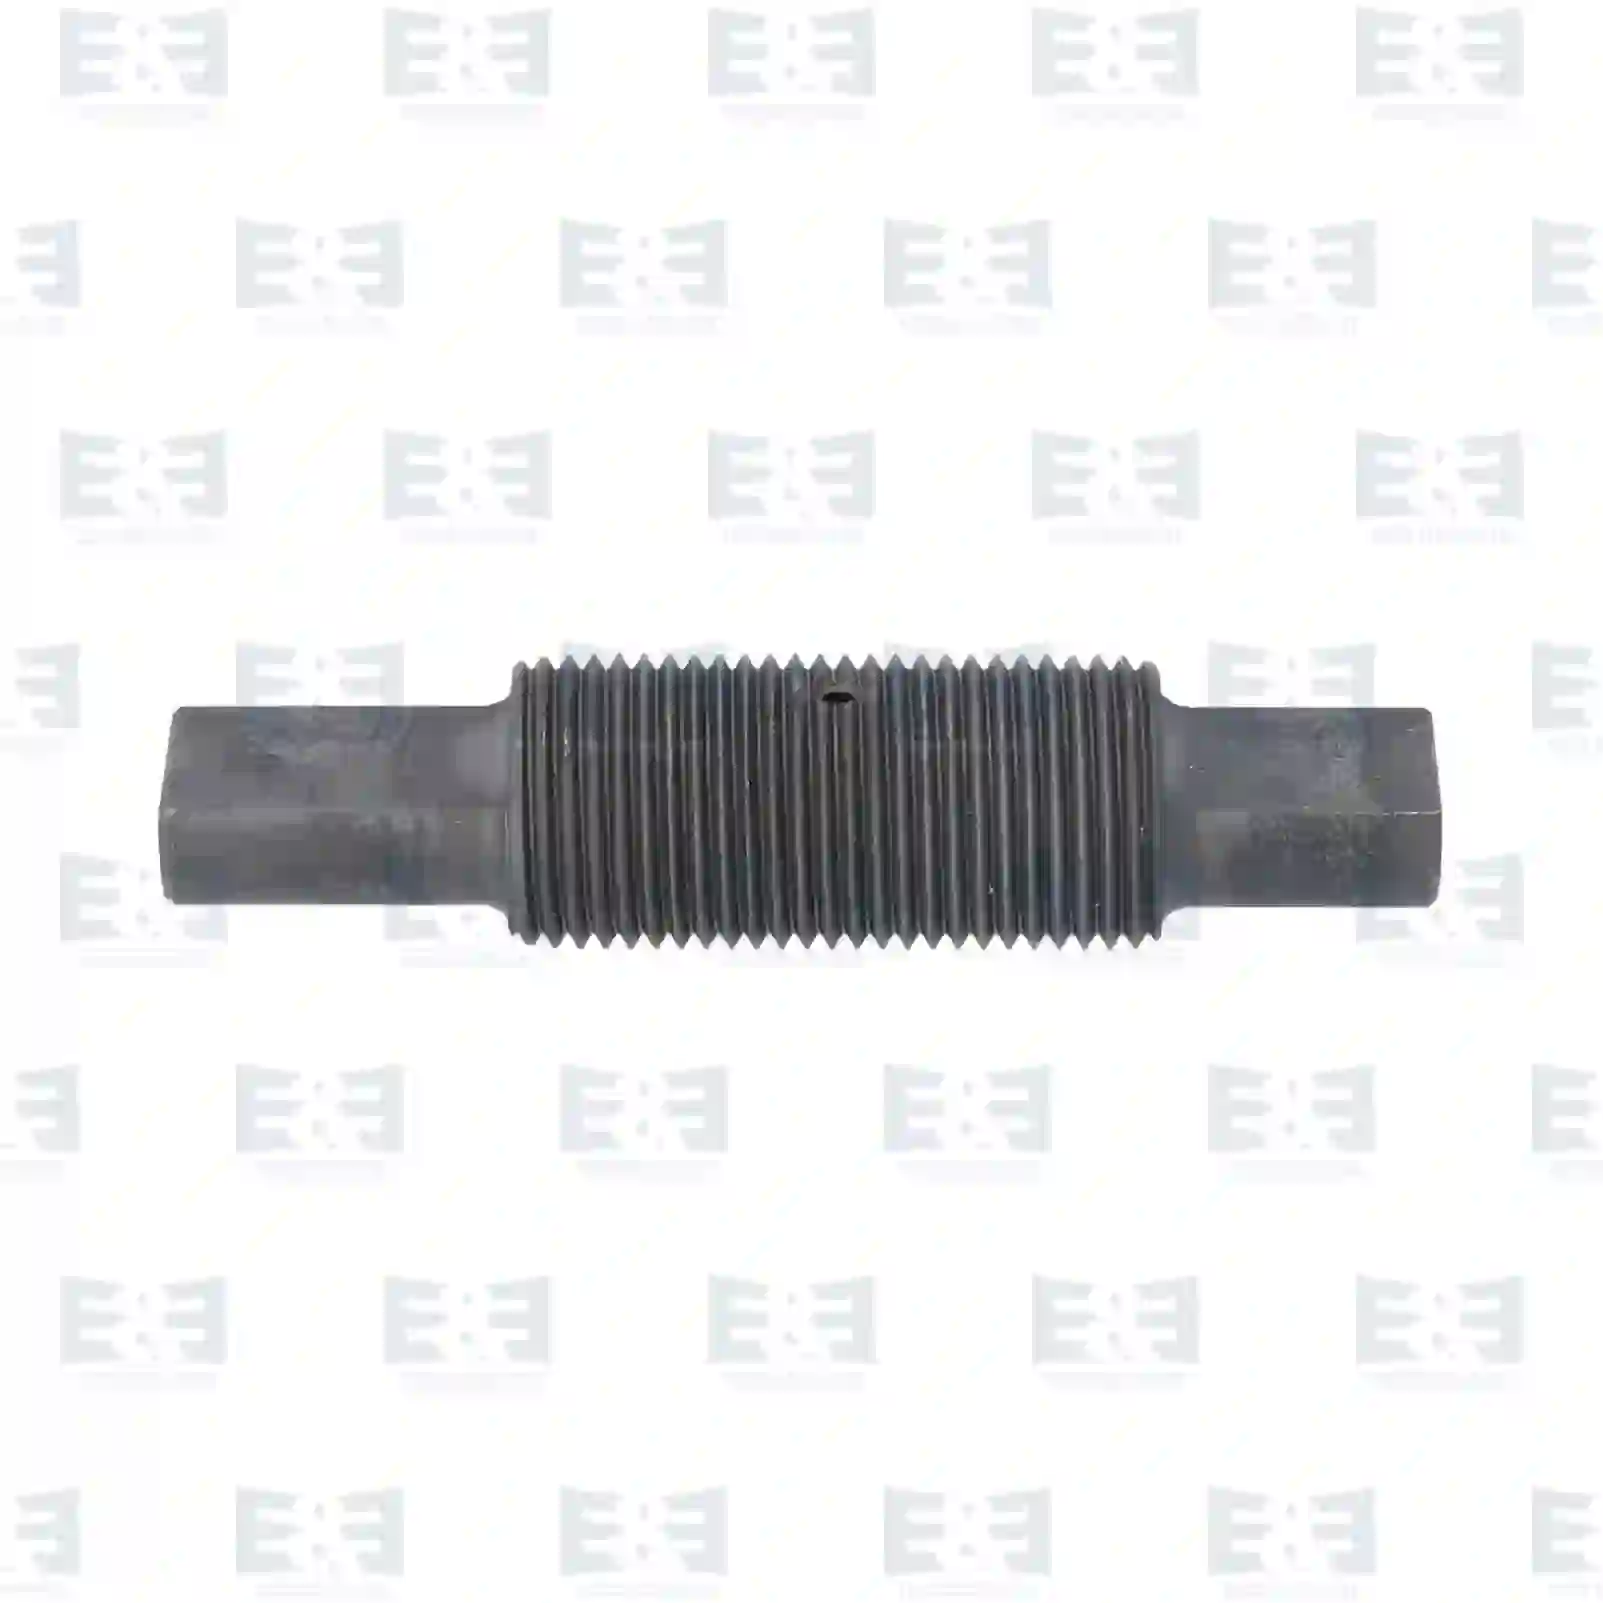  Spring bolt || E&E Truck Spare Parts | Truck Spare Parts, Auotomotive Spare Parts